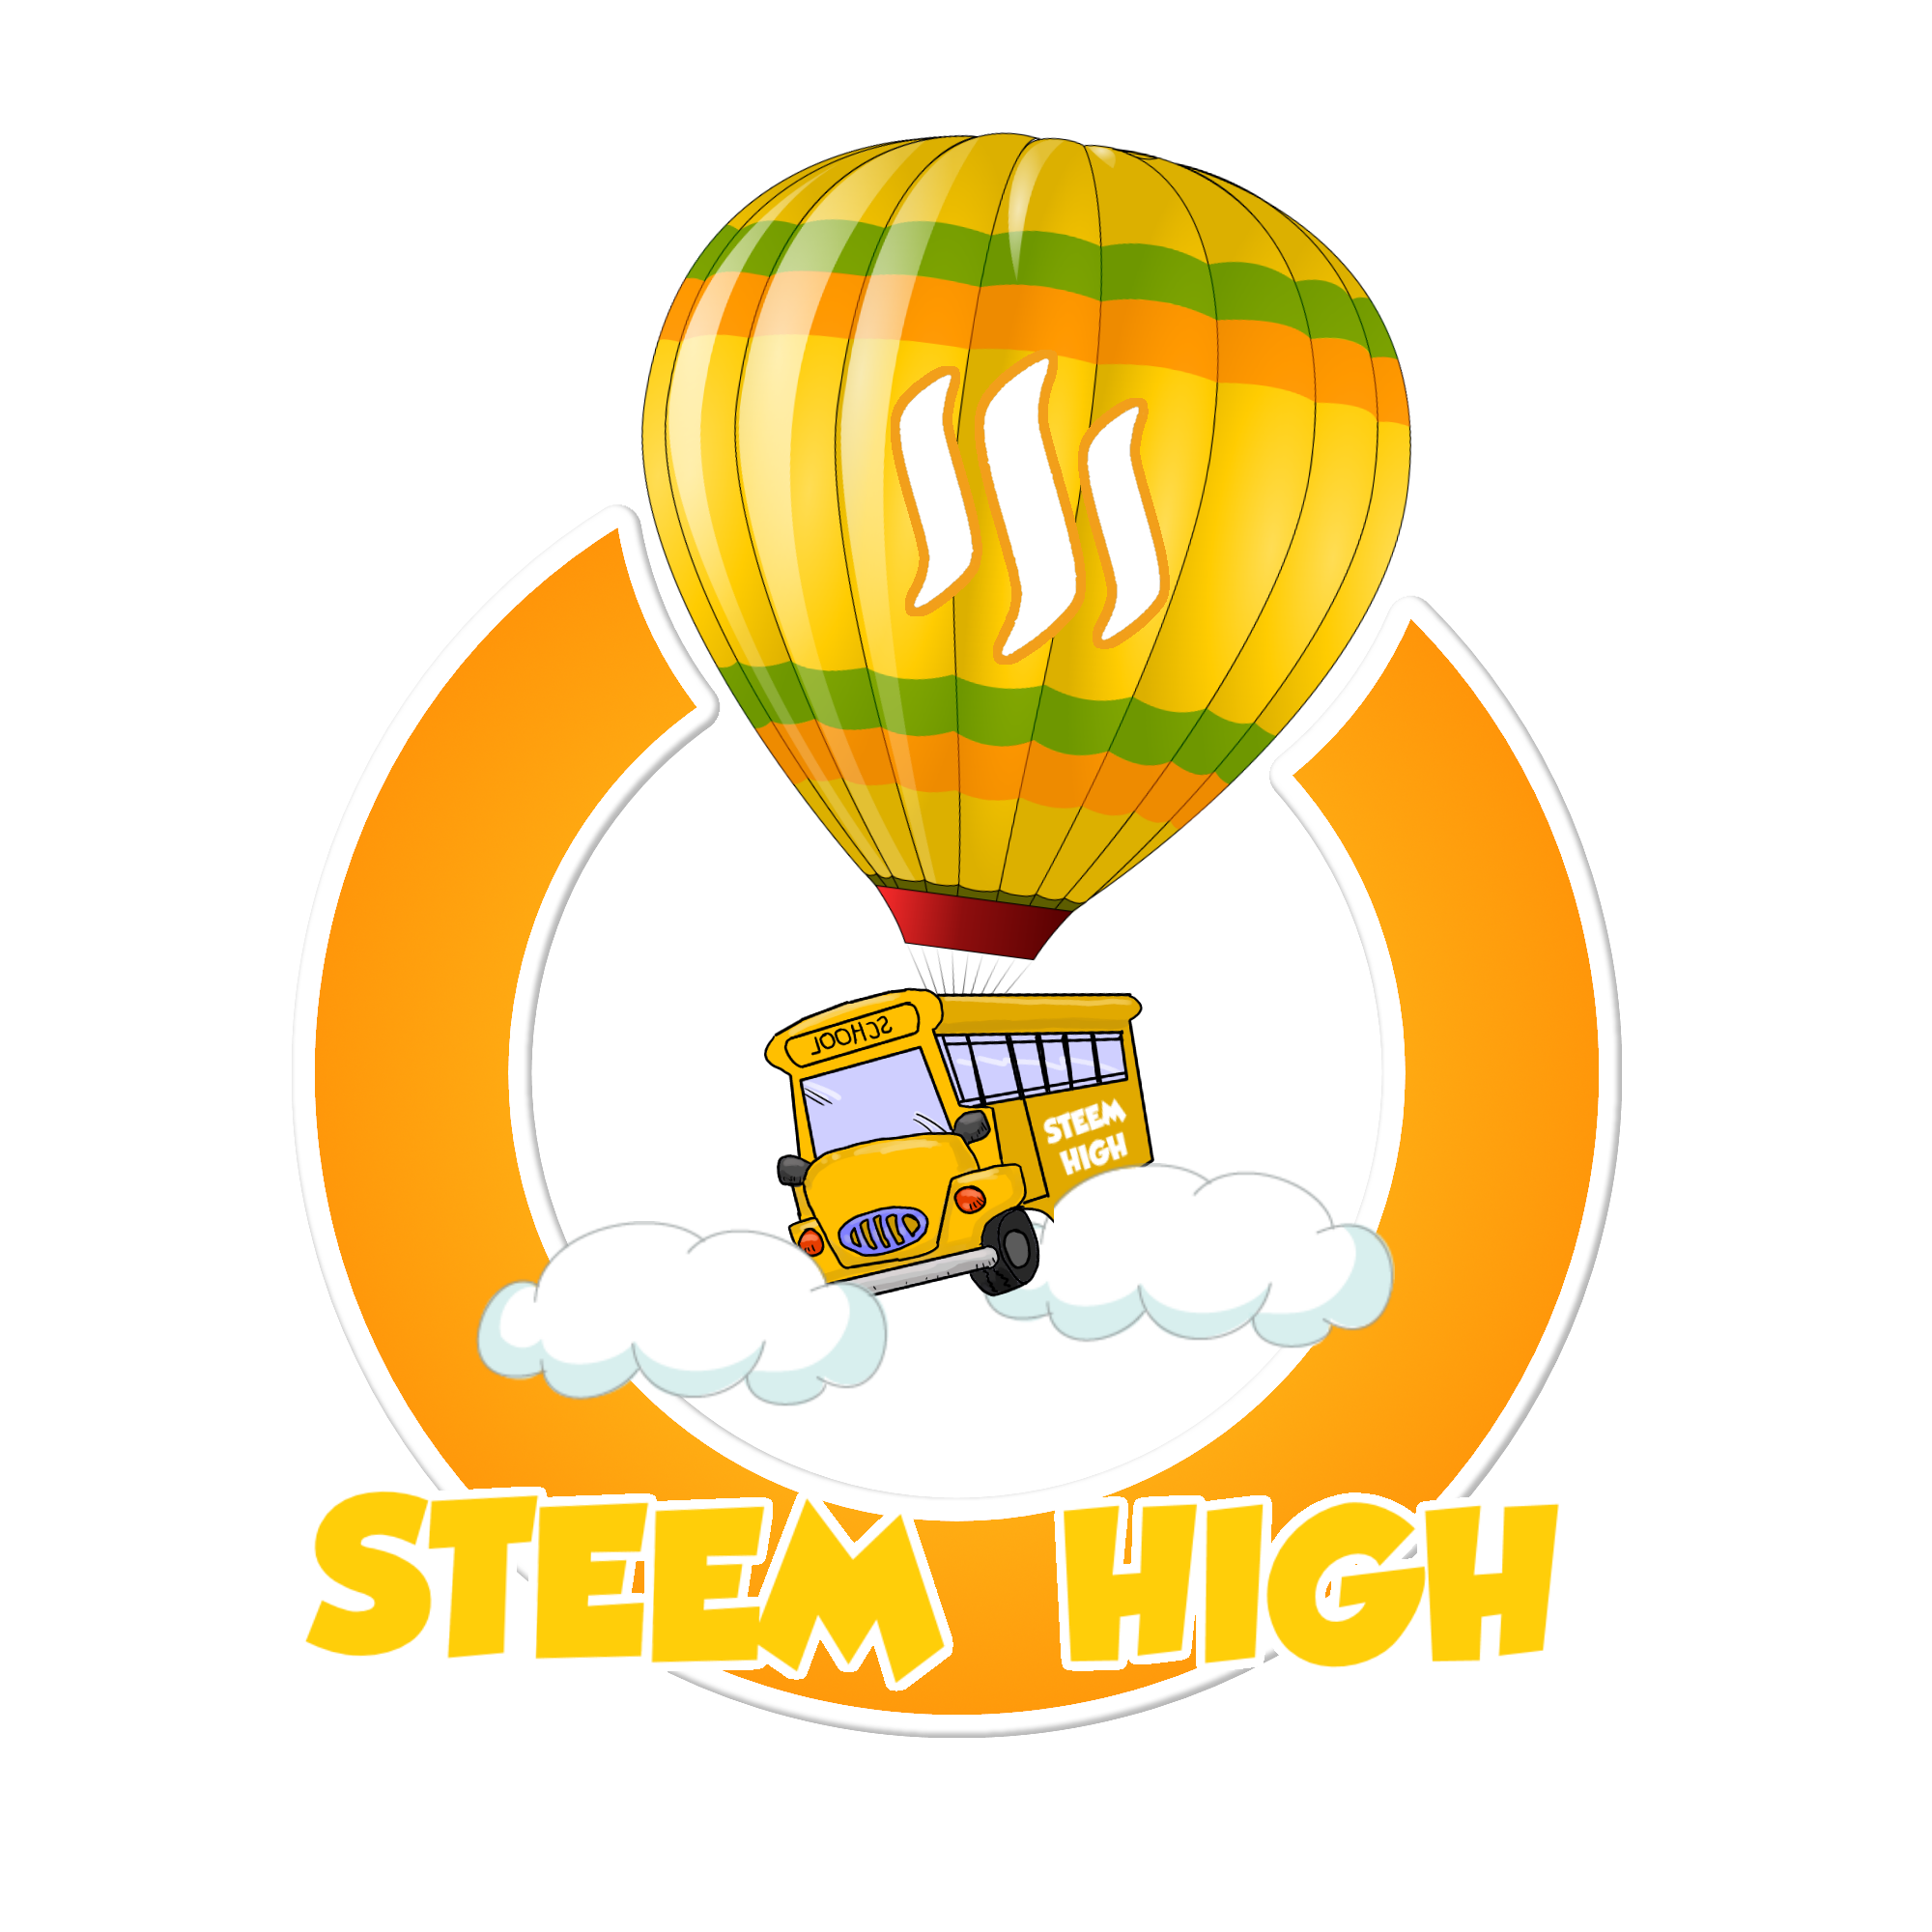 Логошар. Эмблема воздушный шар. Логотип воздушных шаров. Логотип на воздушном шаре. Логотип с воздушными шарами.